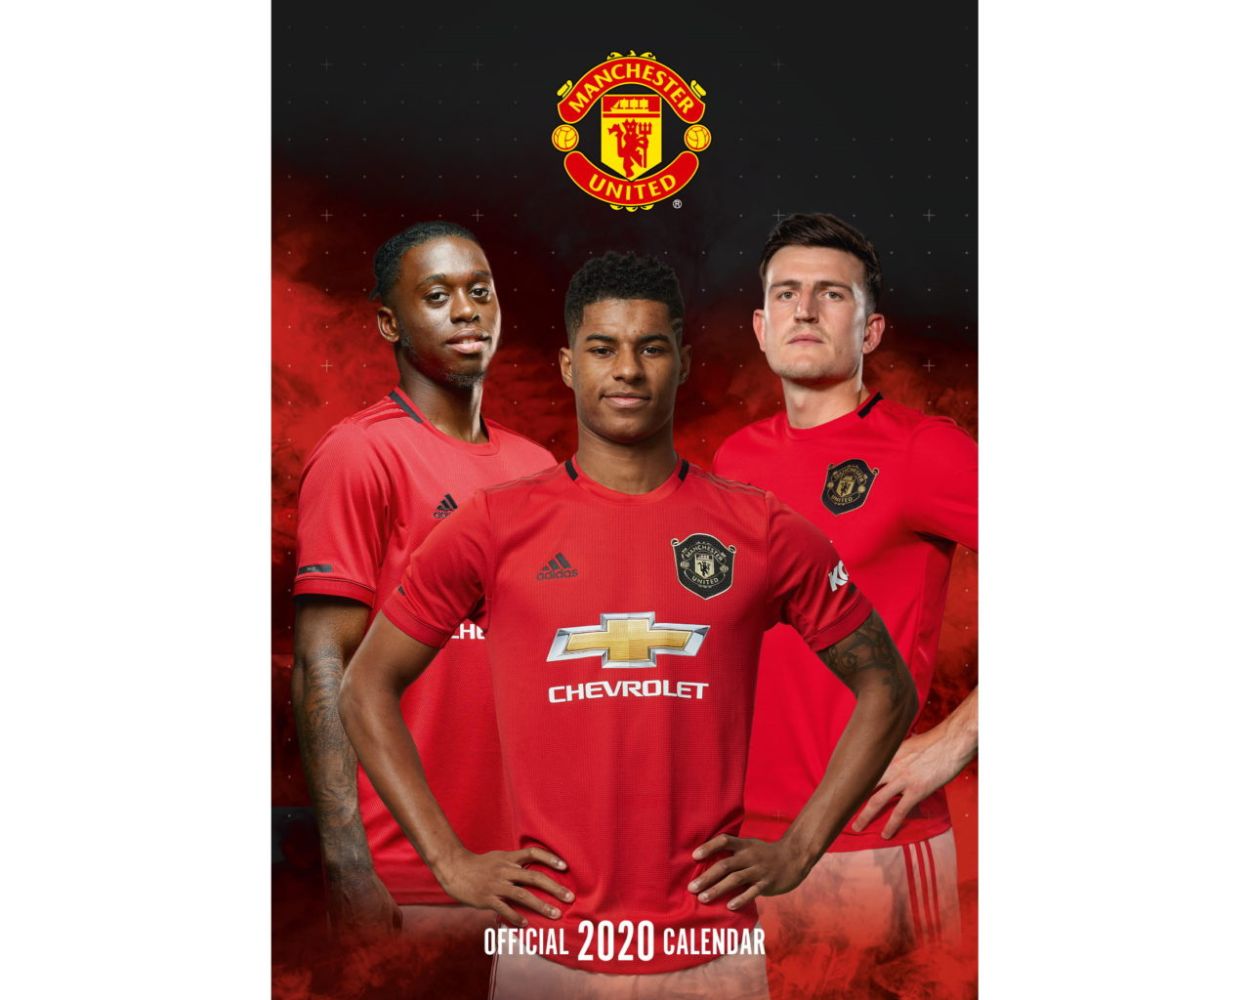 Manchester United 2020 Official Calendar